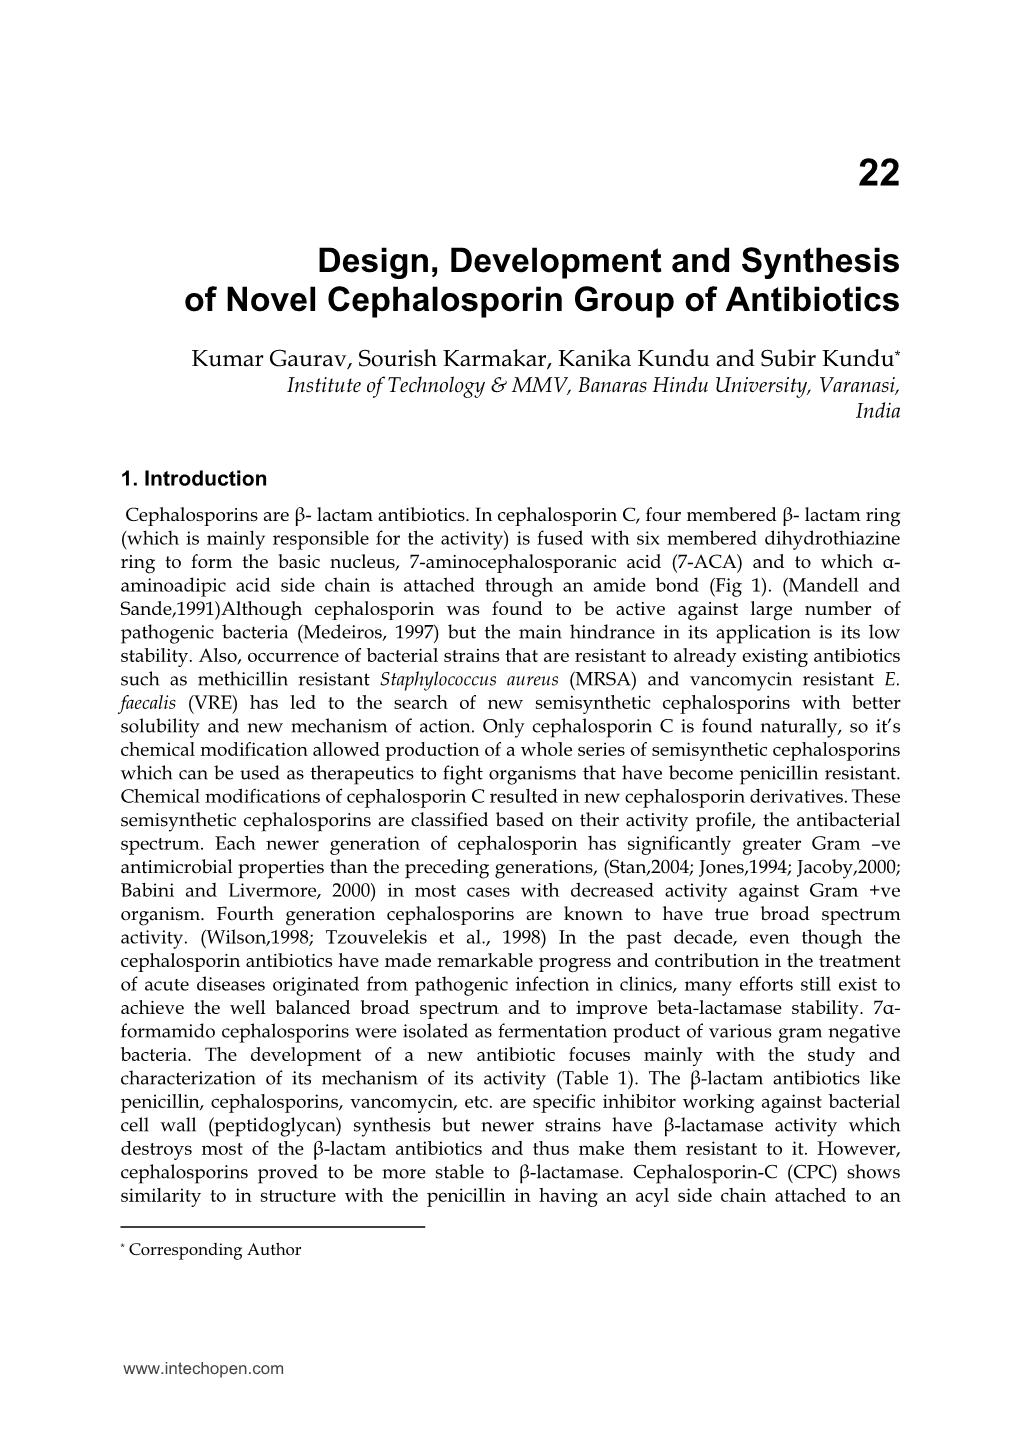 Design, Development and Synthesis of Novel Cephalosporin Group of Antibiotics